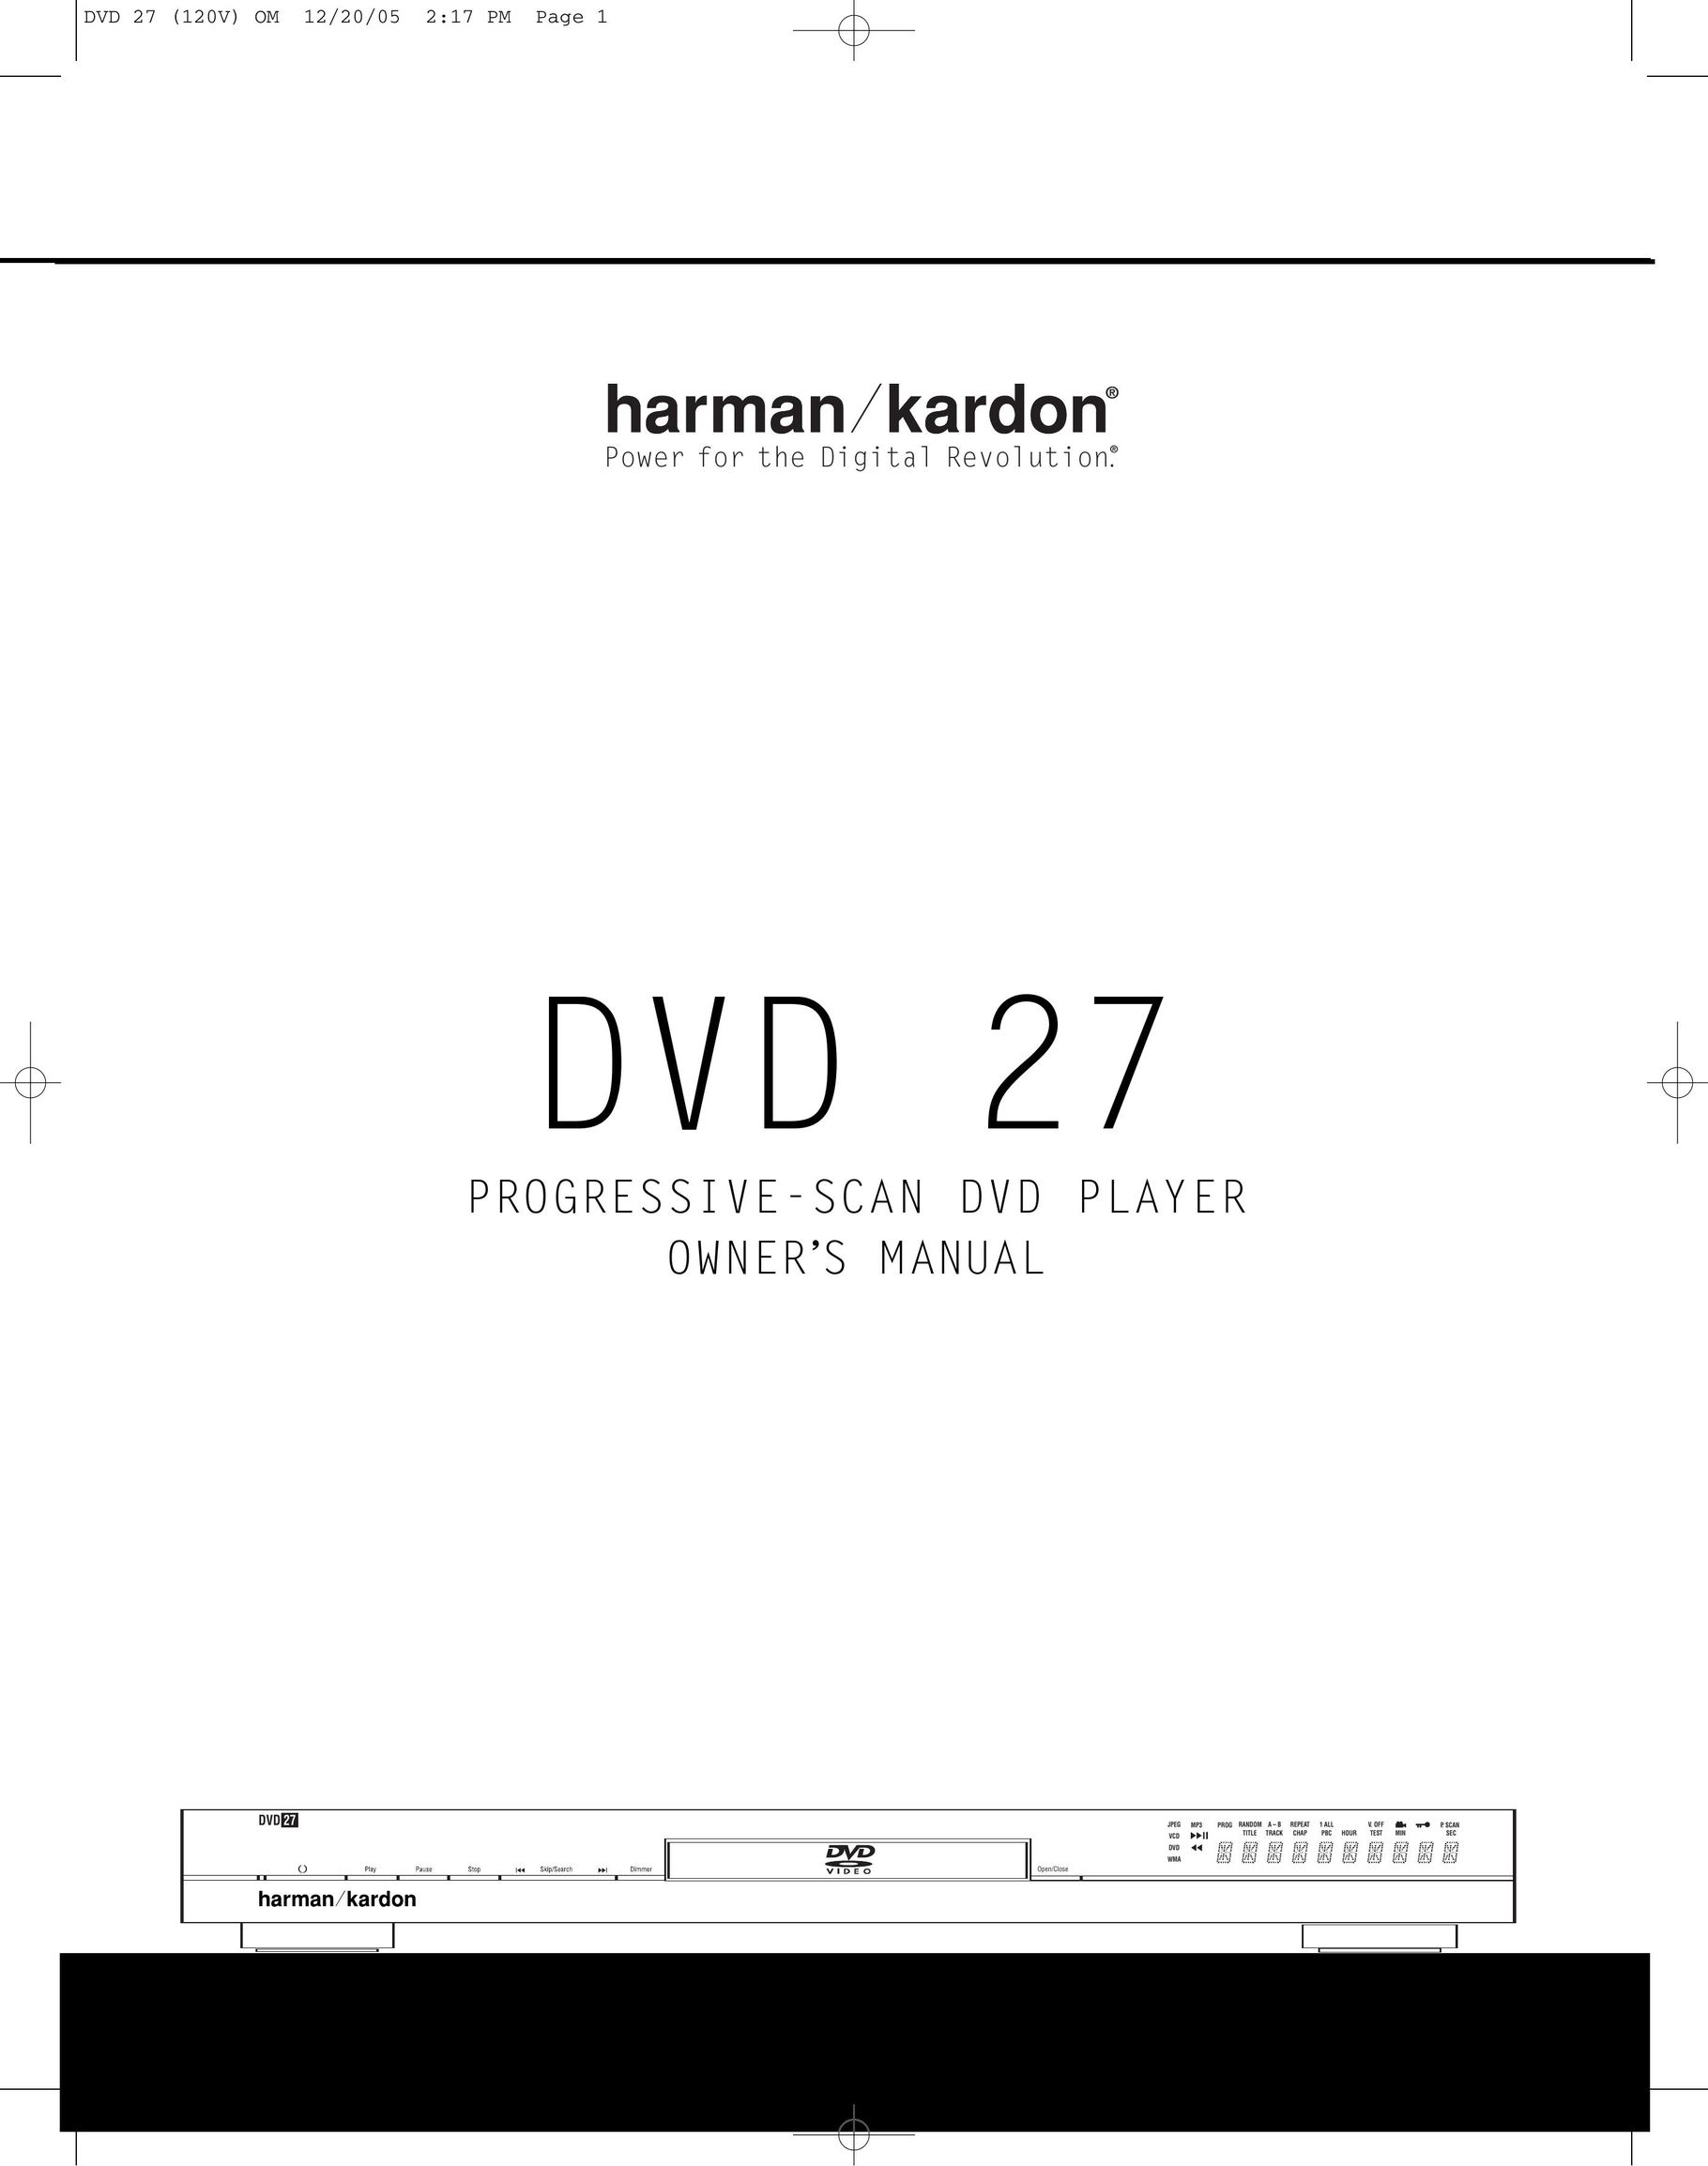 Harman-Kardon Progressive-Scan DVD Player DVD Player User Manual